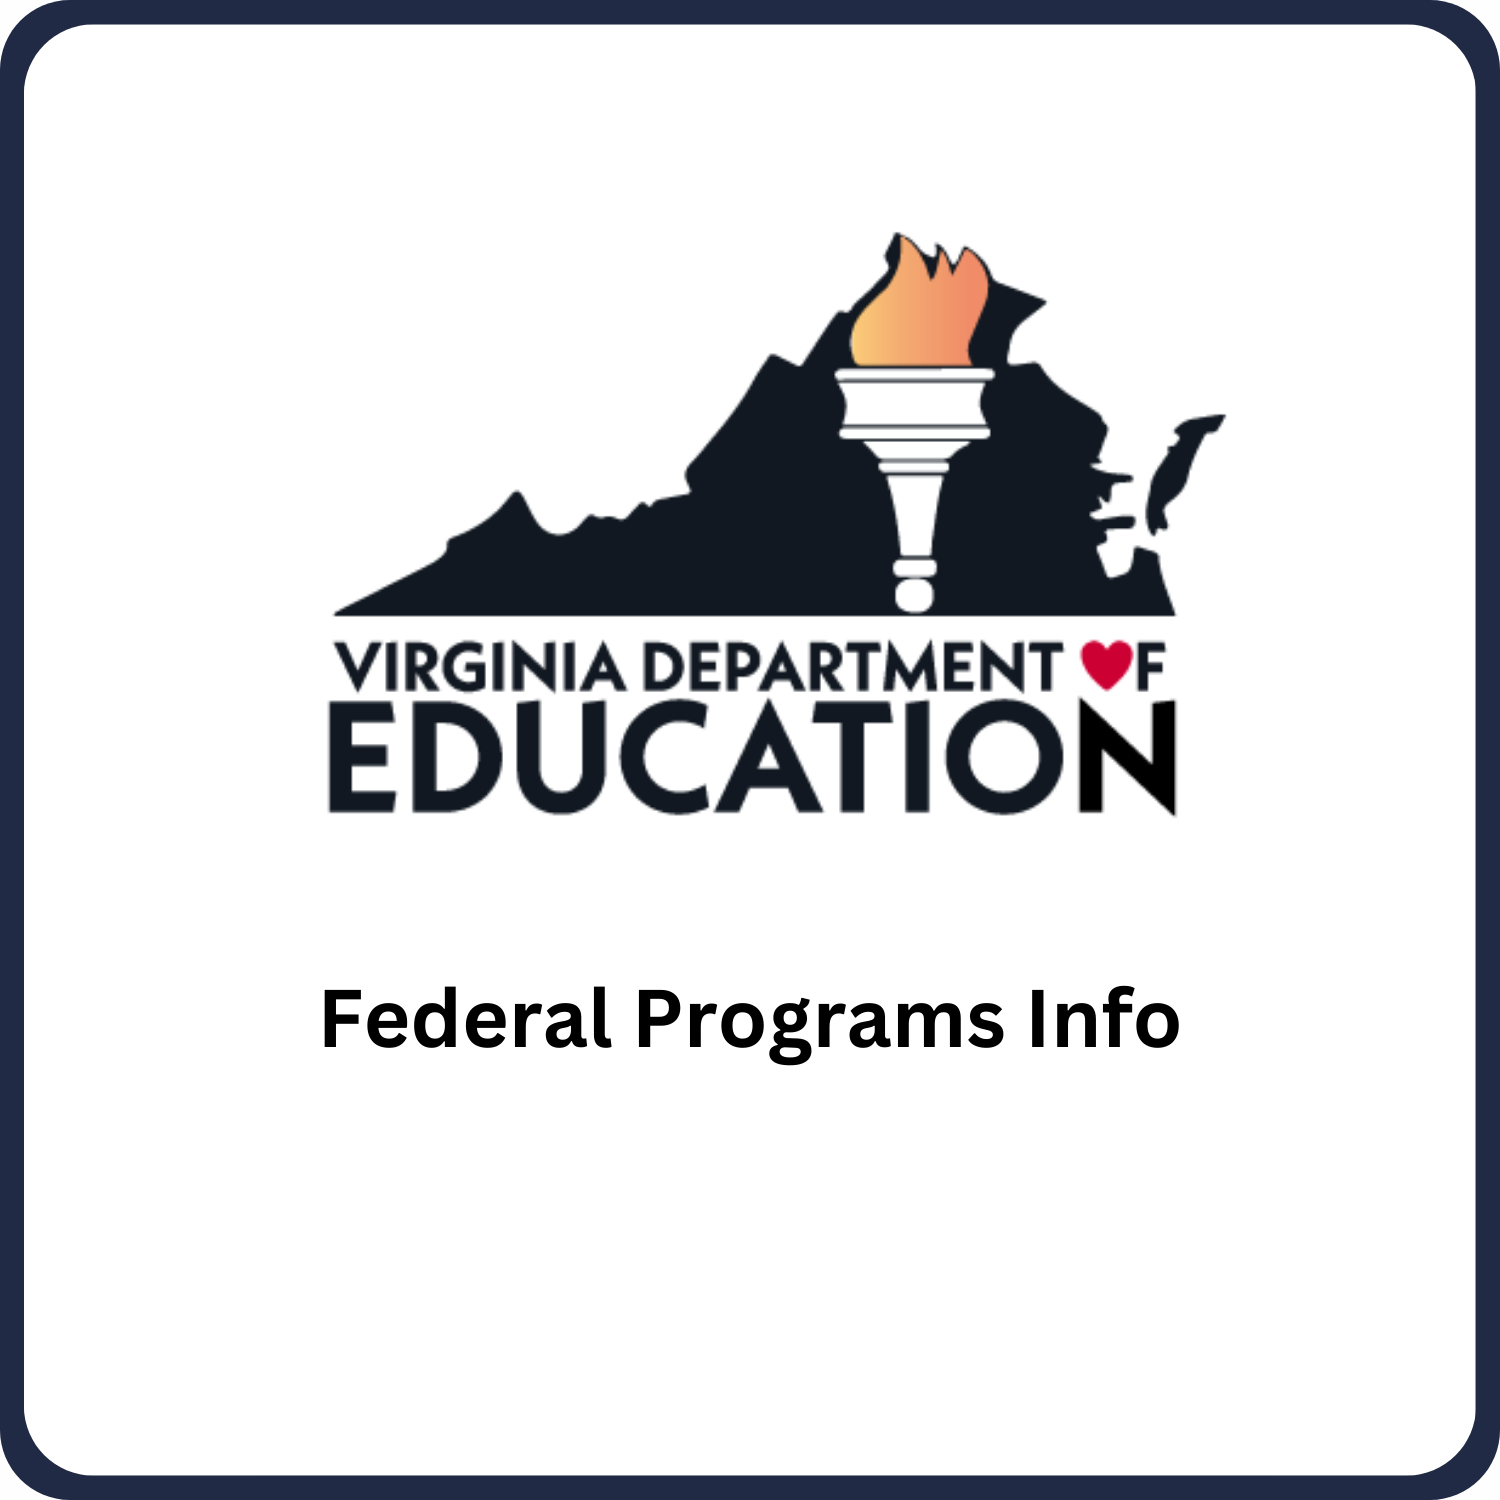 Federal Programs Info